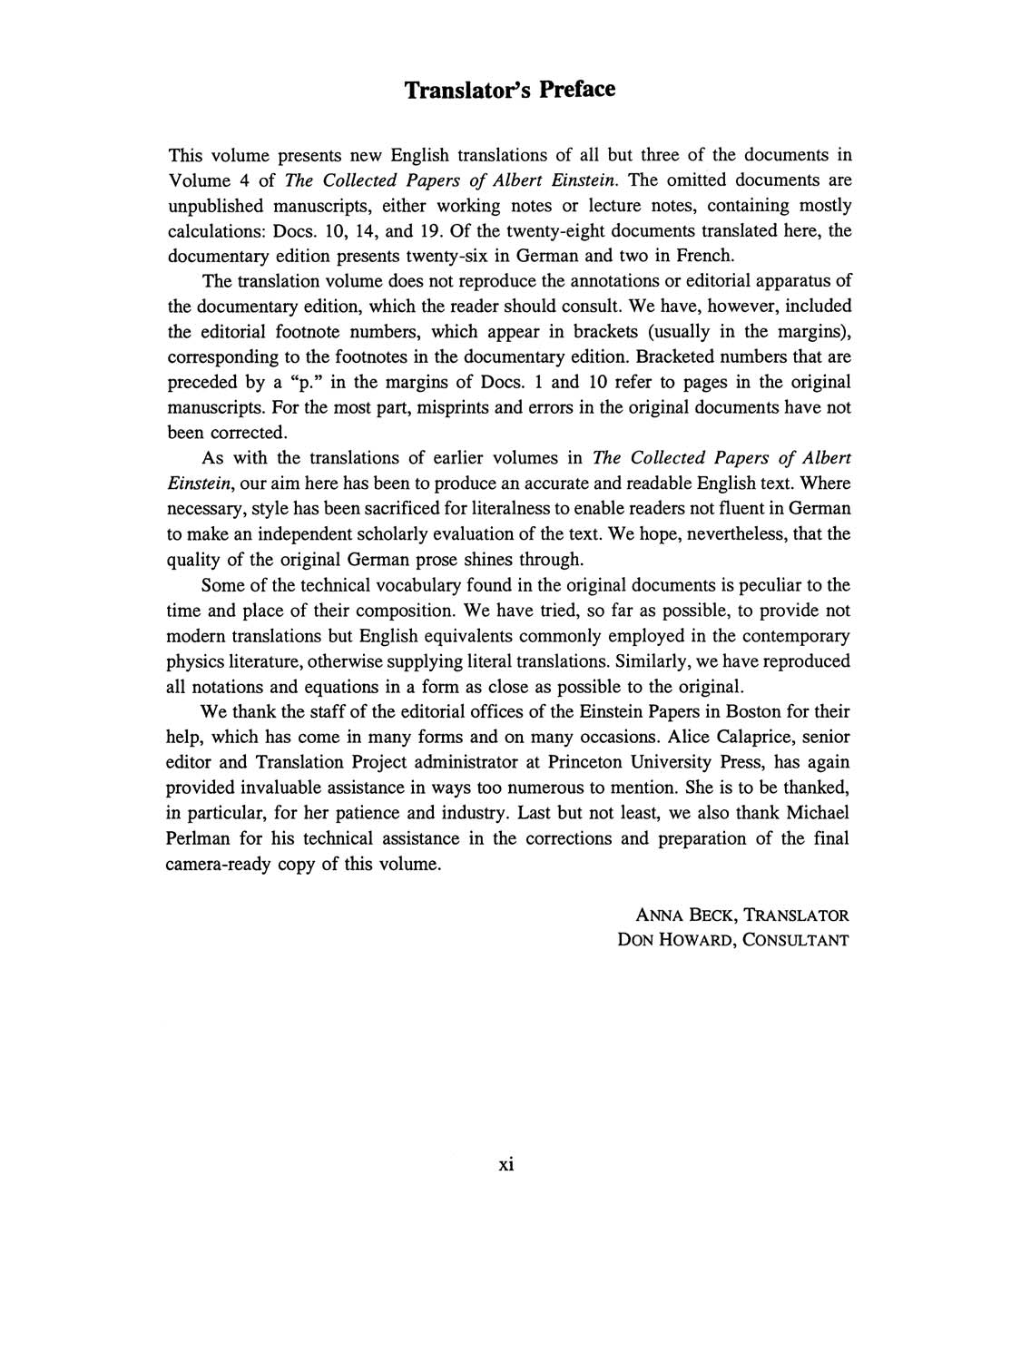 Volume 4: The Swiss Years: Writings 1912-1914 (English translation supplement) page xi